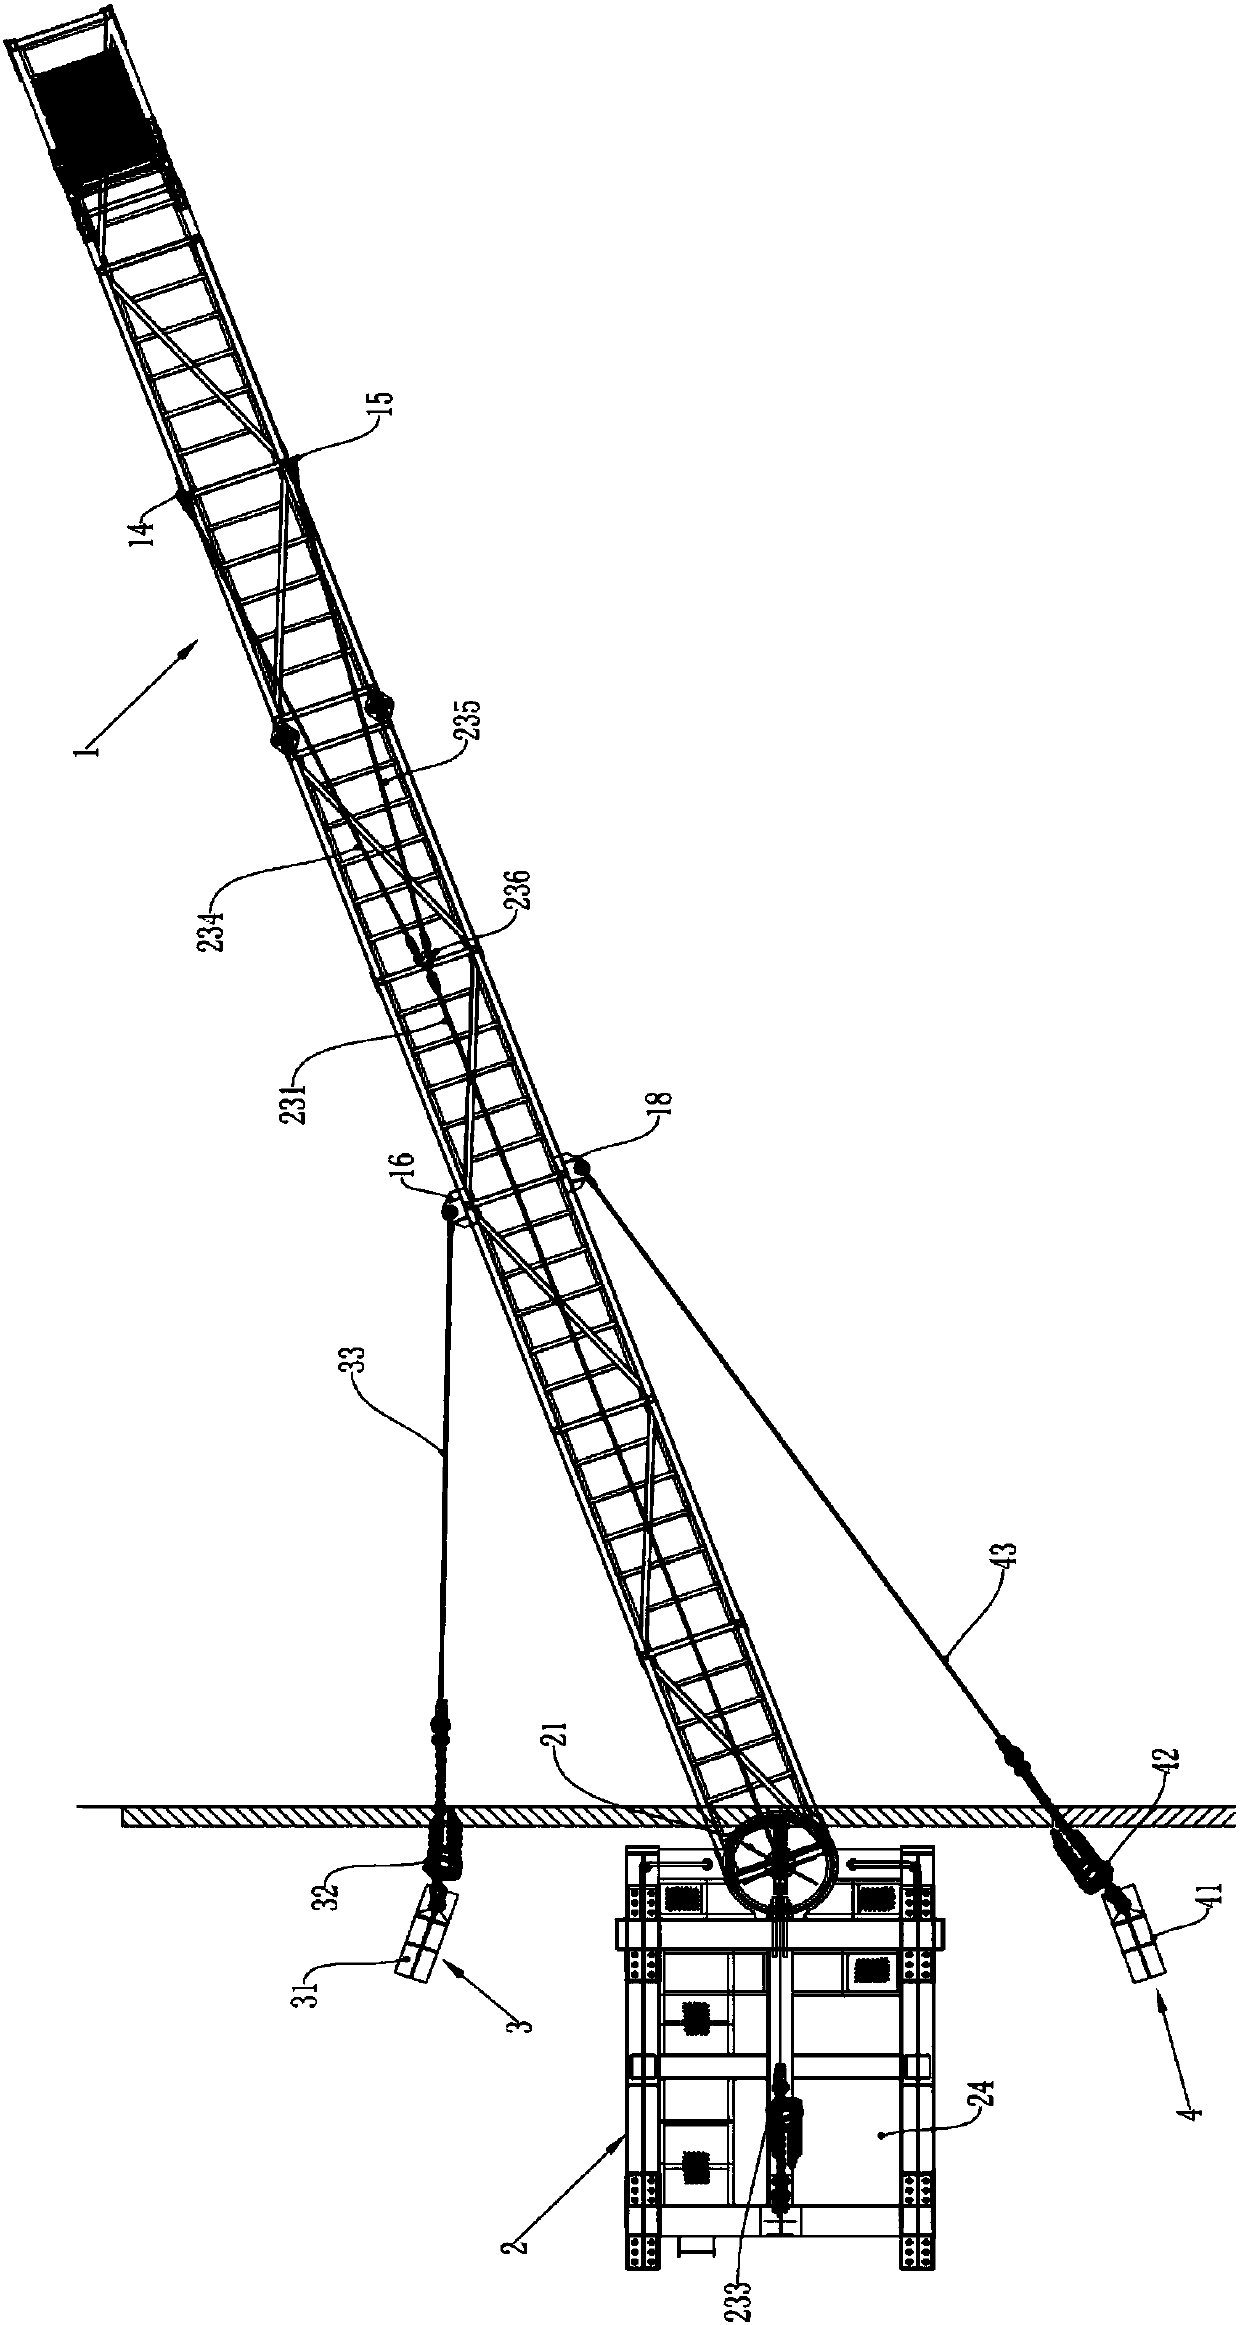 Seaborne accommodation ladder used for wind electricity platform